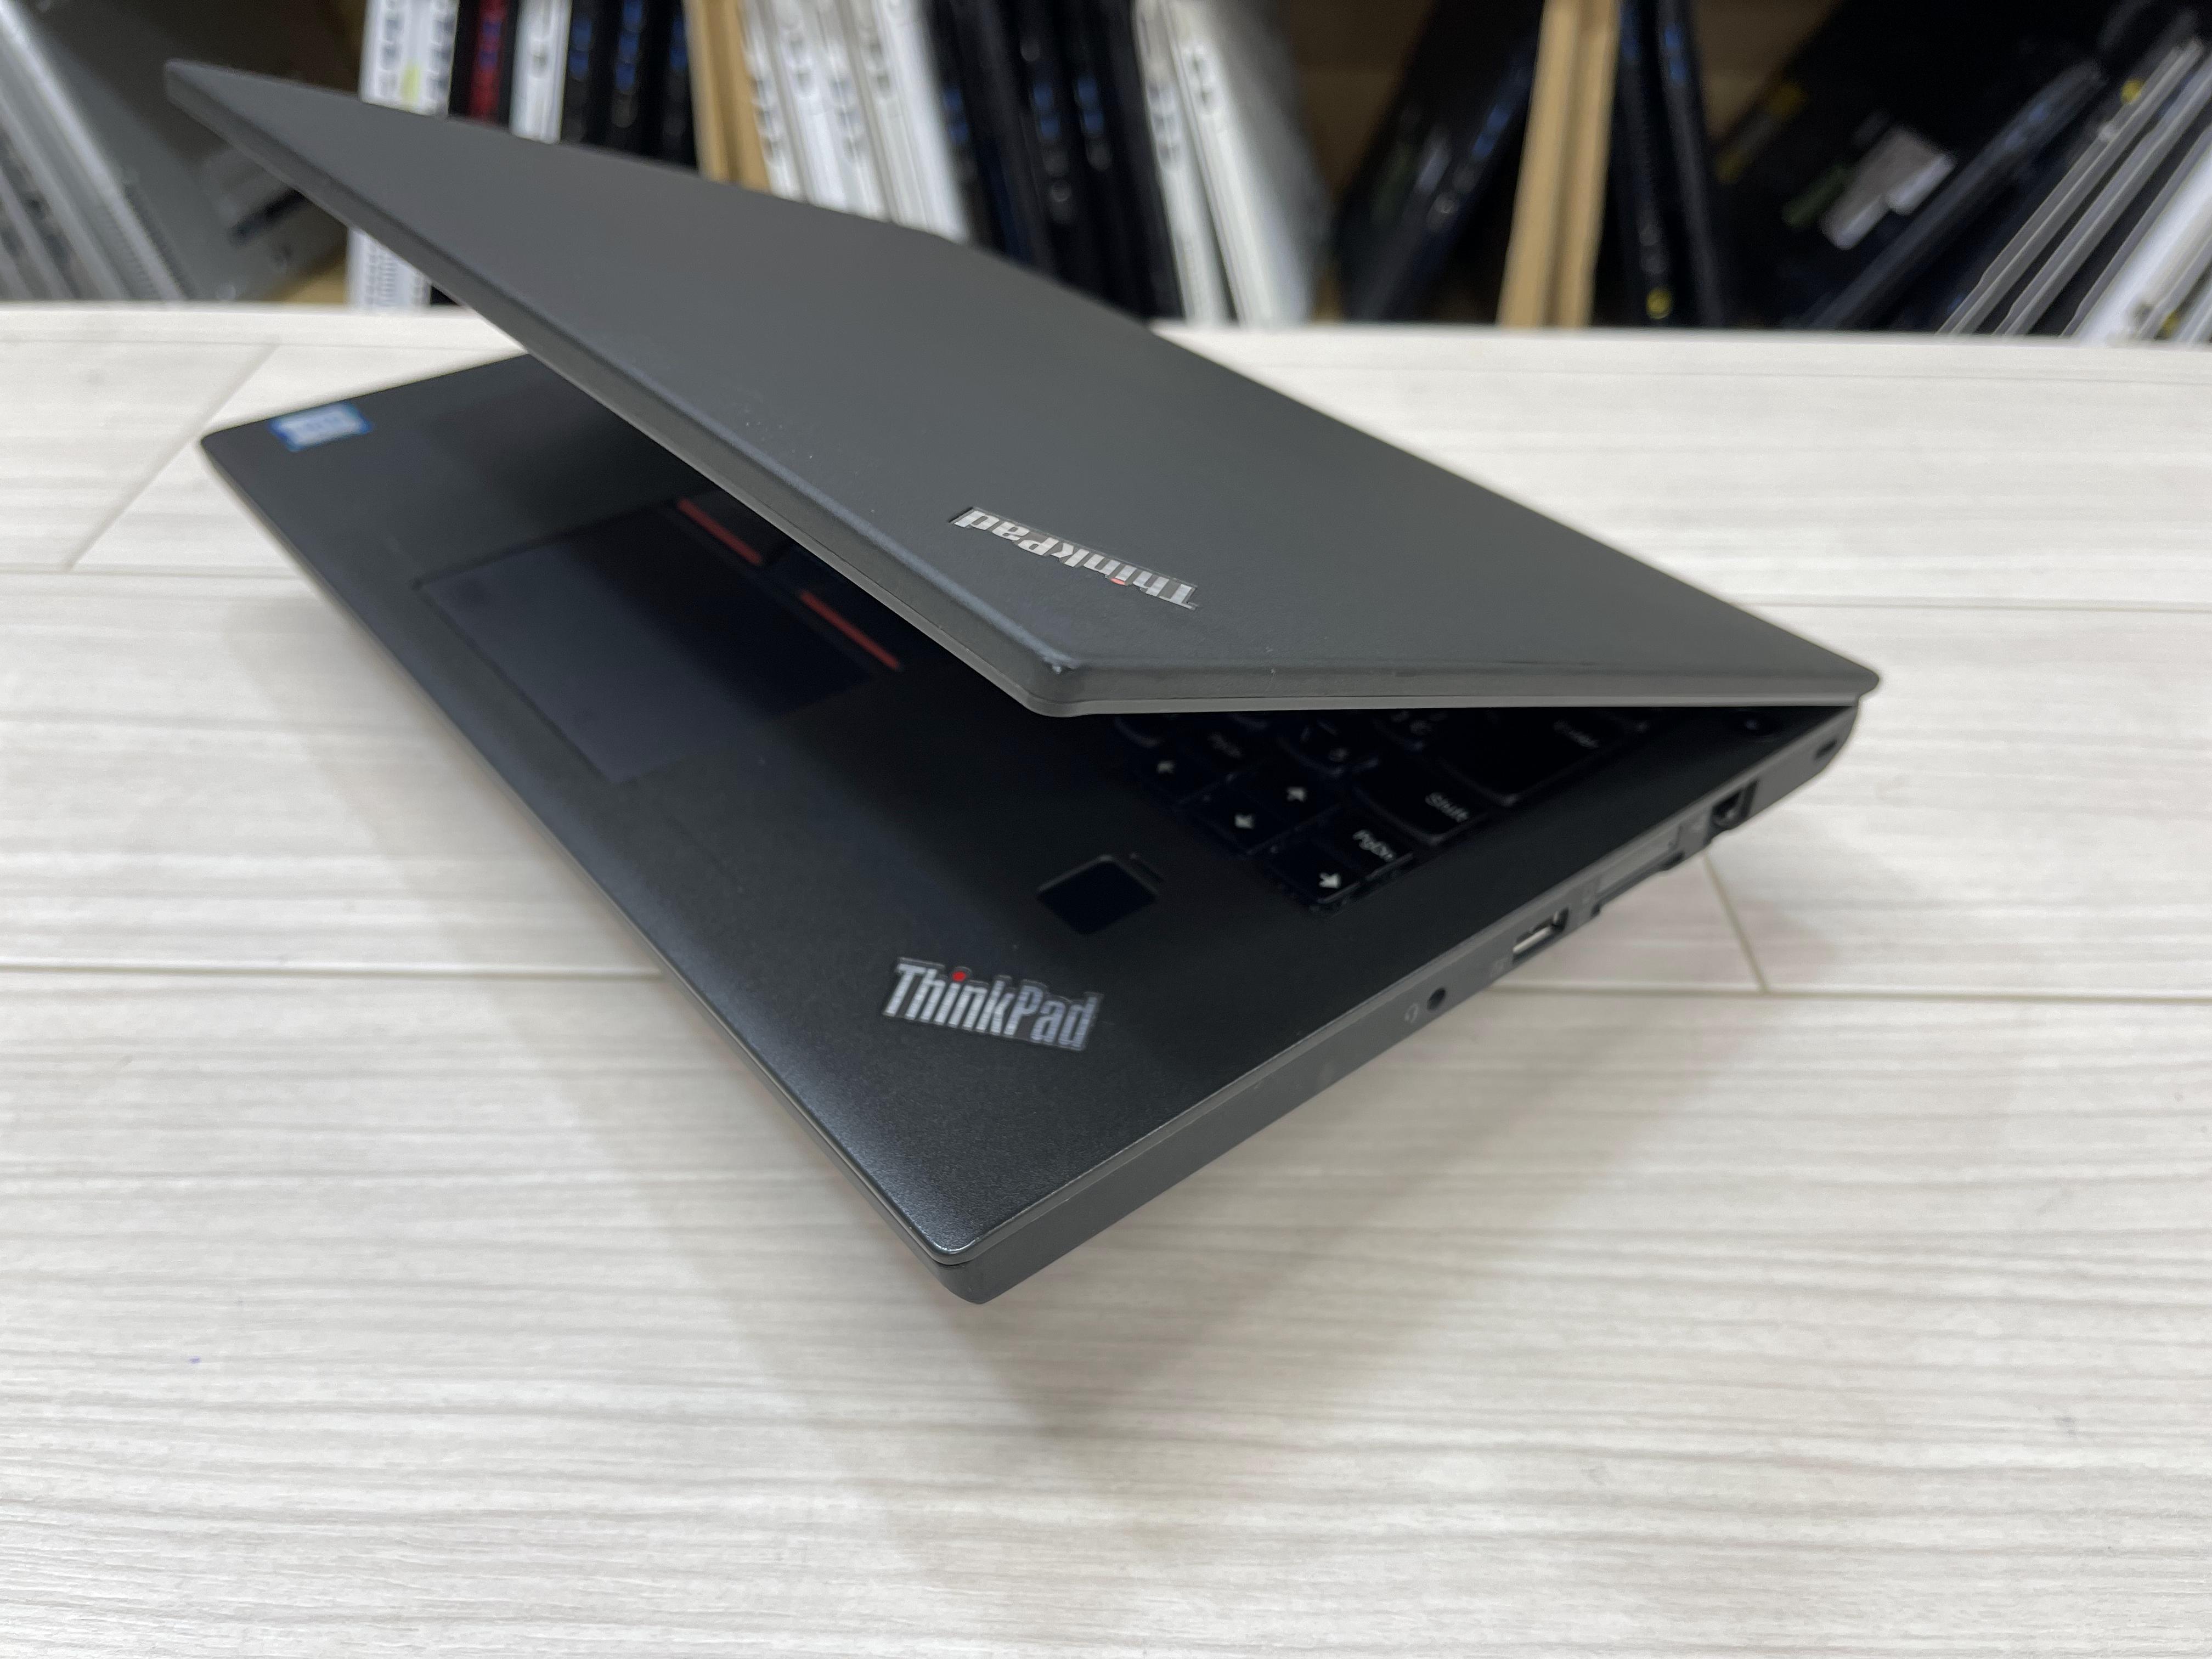 LENOVO ThinkPad X270  12.5 inch  FUll Led  / model 2016 / Core i7Vpro / 6600U / 2.60-2.8GHz  / ram 8G  / SSD 256G / Win 10 pro Tiếng Việt . MS: 20220524 087A